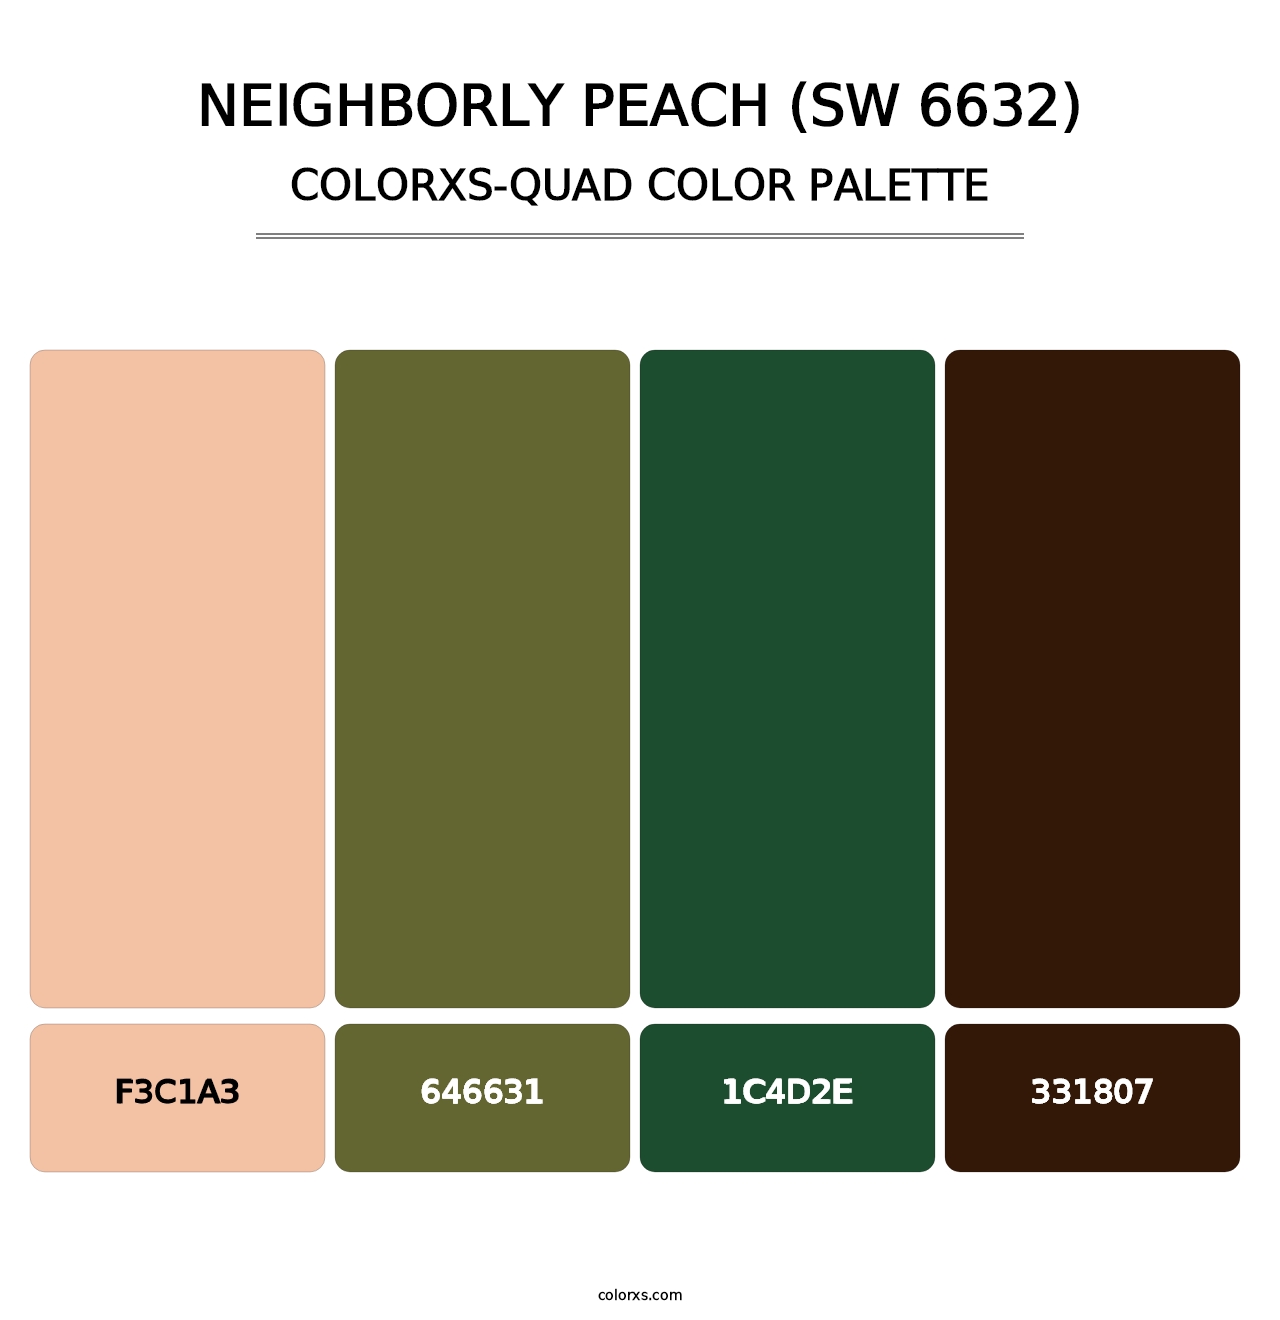 Neighborly Peach (SW 6632) - Colorxs Quad Palette